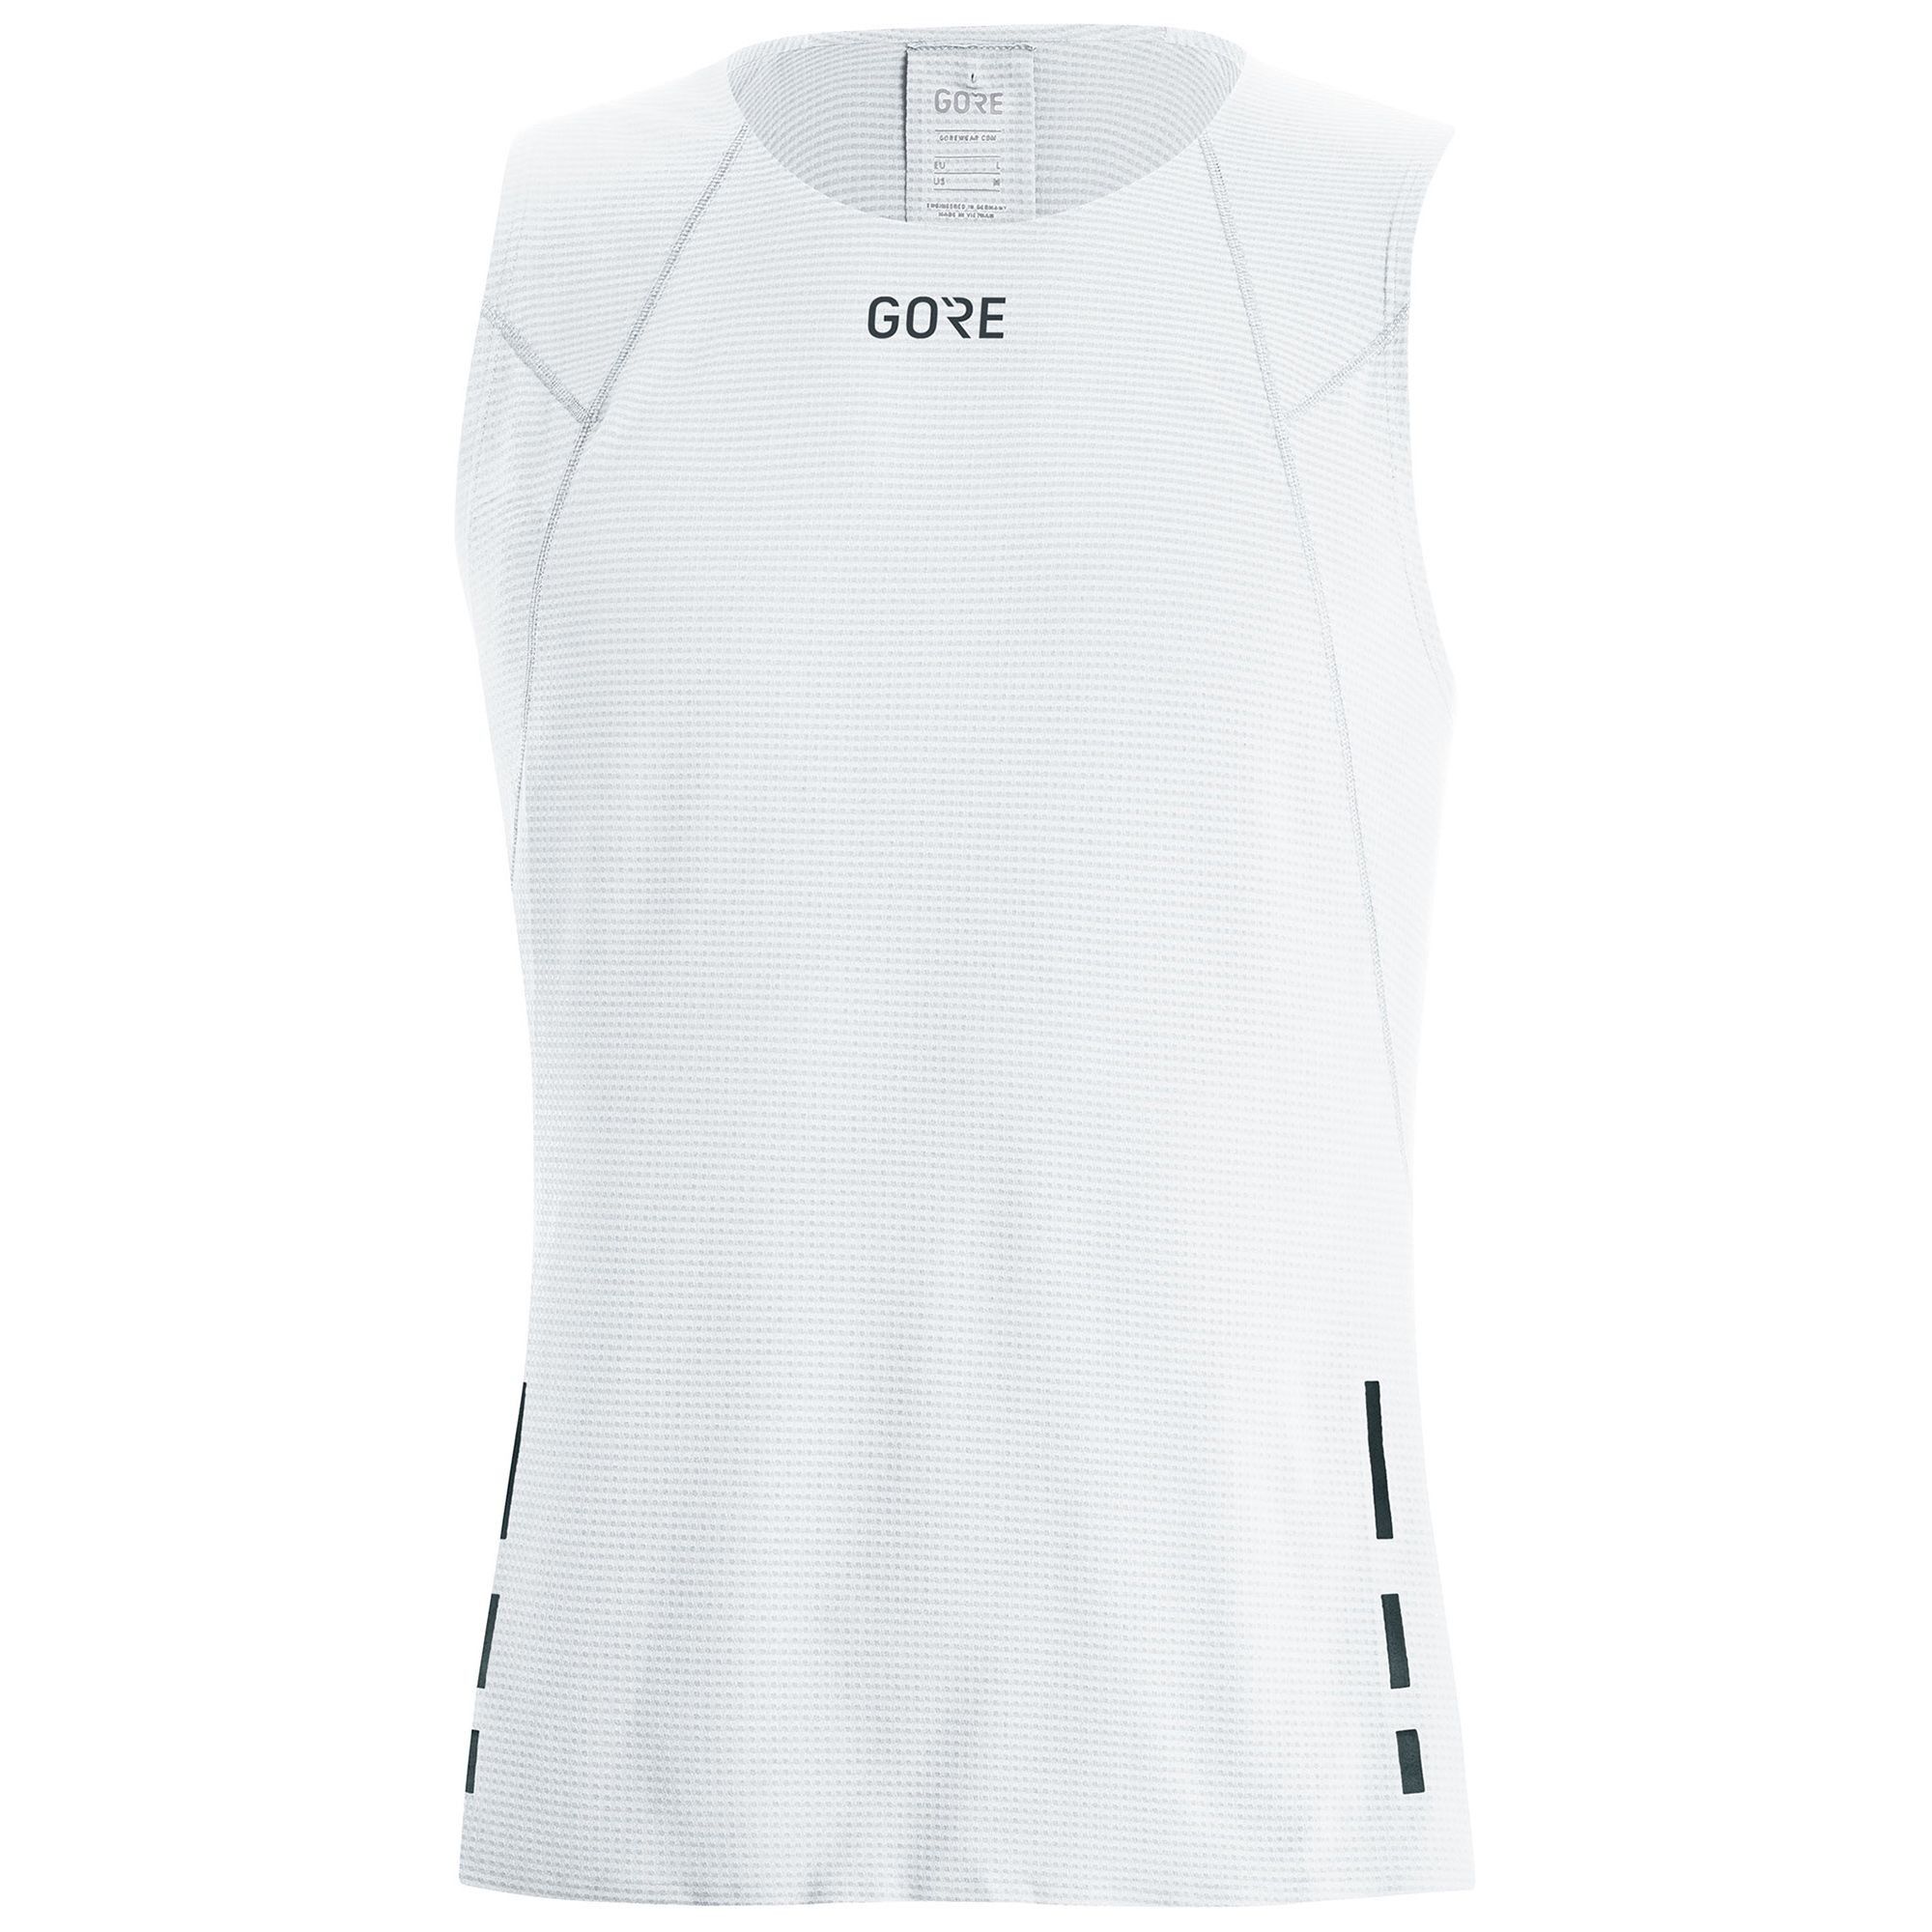 Gore Wear Contest Singlet - Camiseta sin mangas - Hombre